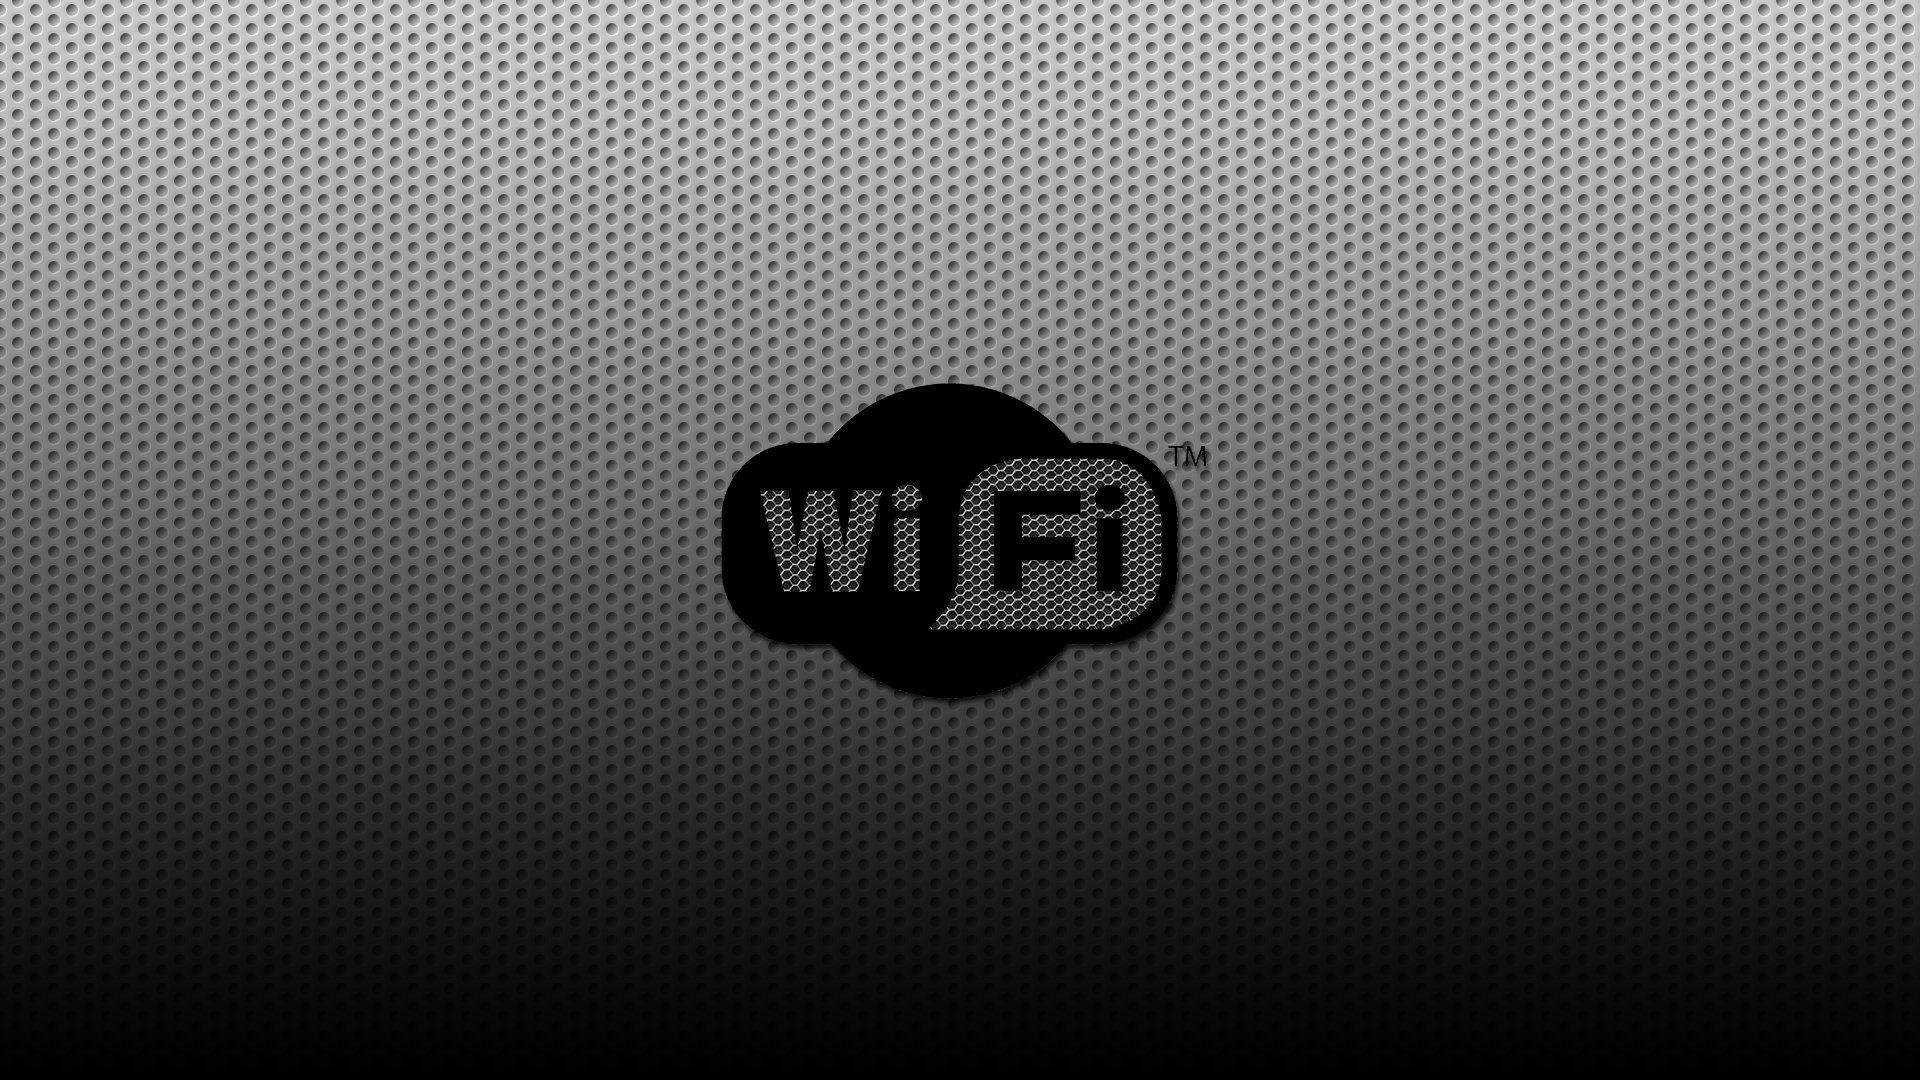 Wifi Background Images  Free Download on Freepik